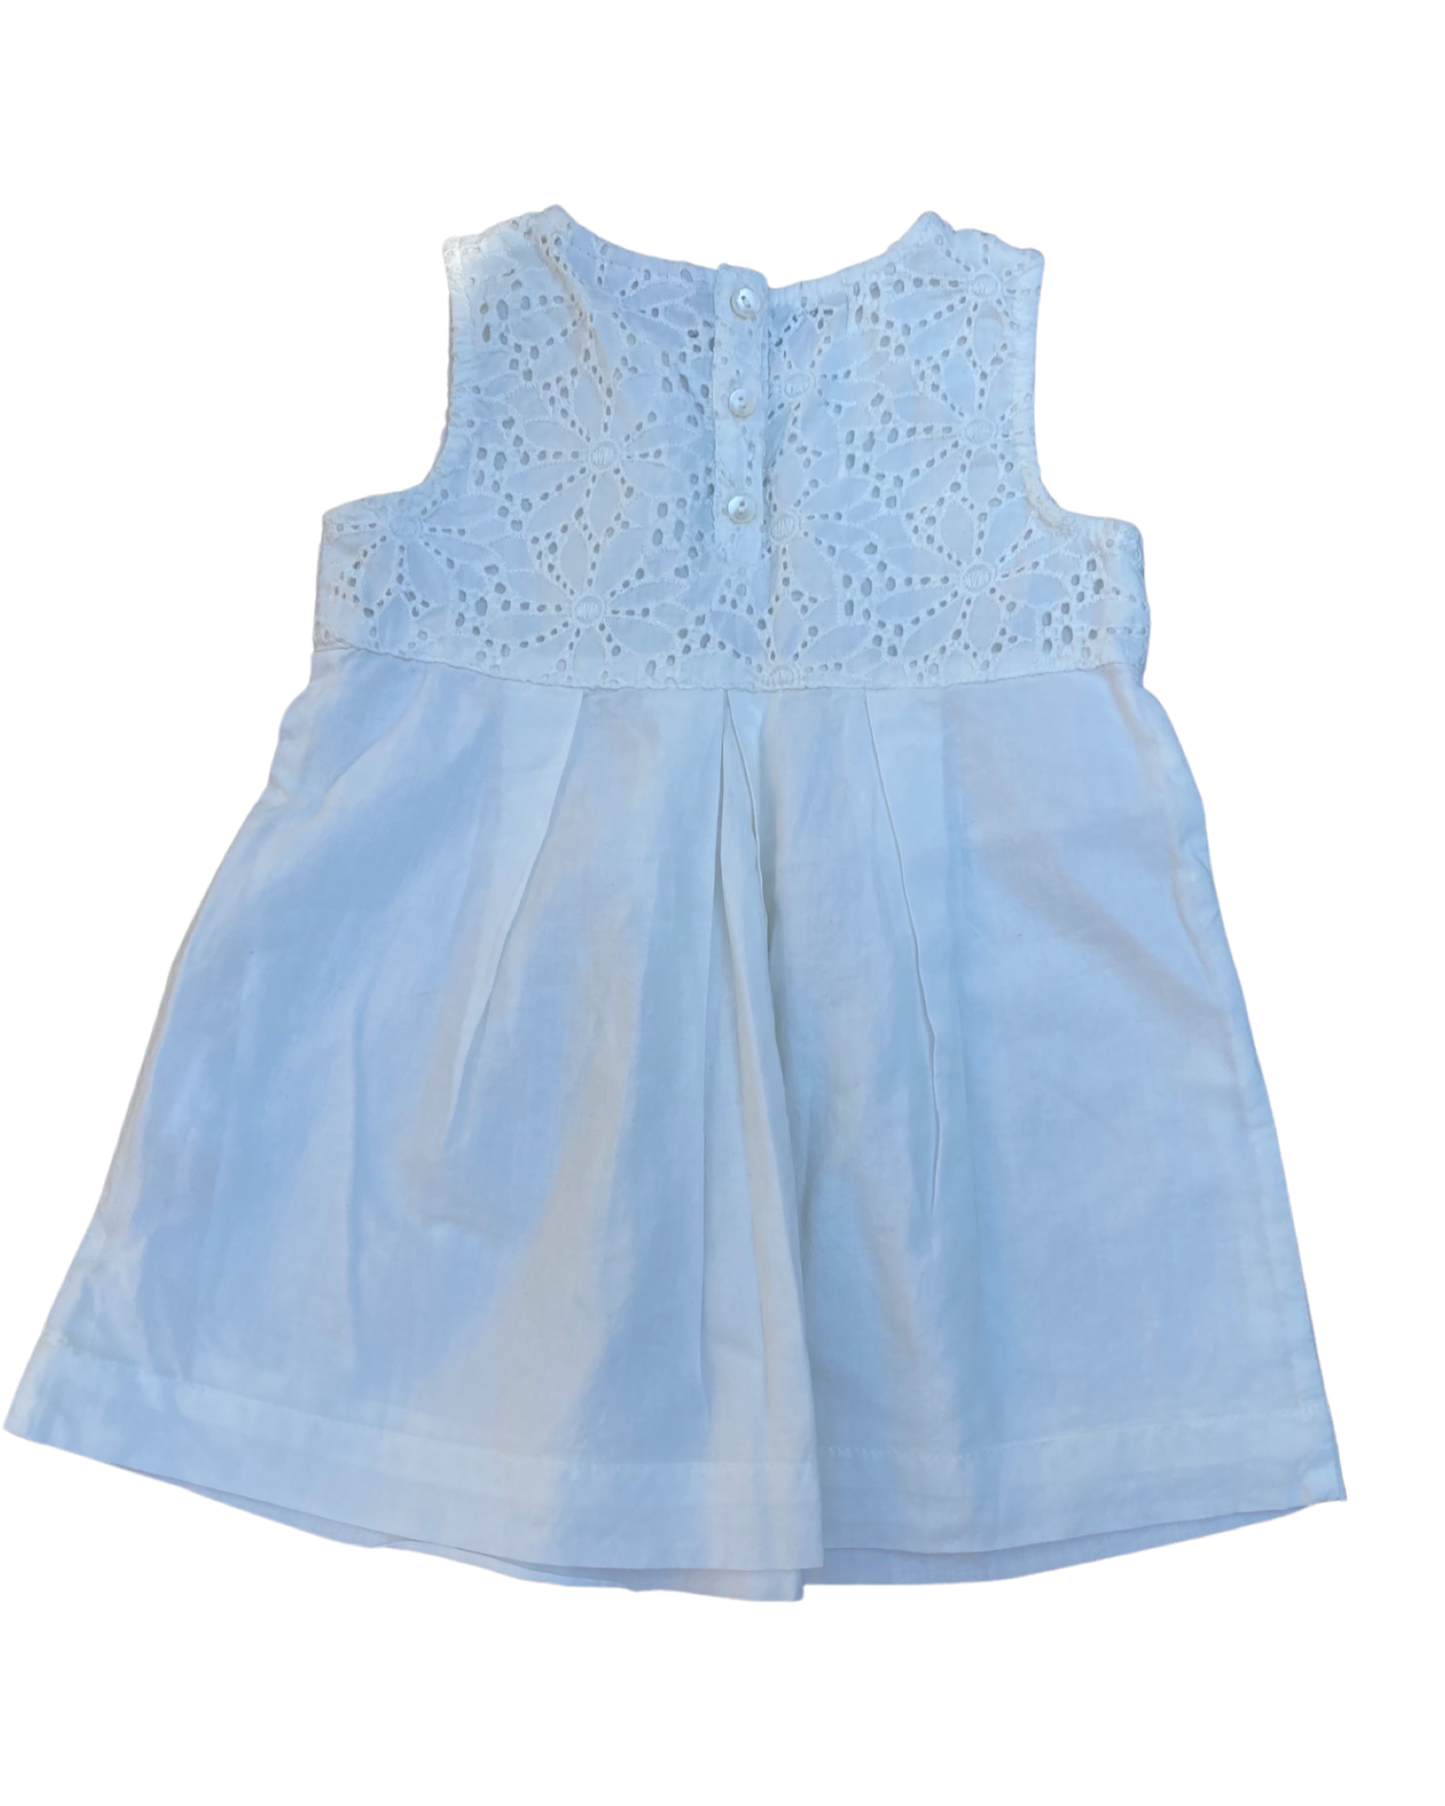 Noa Noa minature cream cotton baby dress (6-9mths)